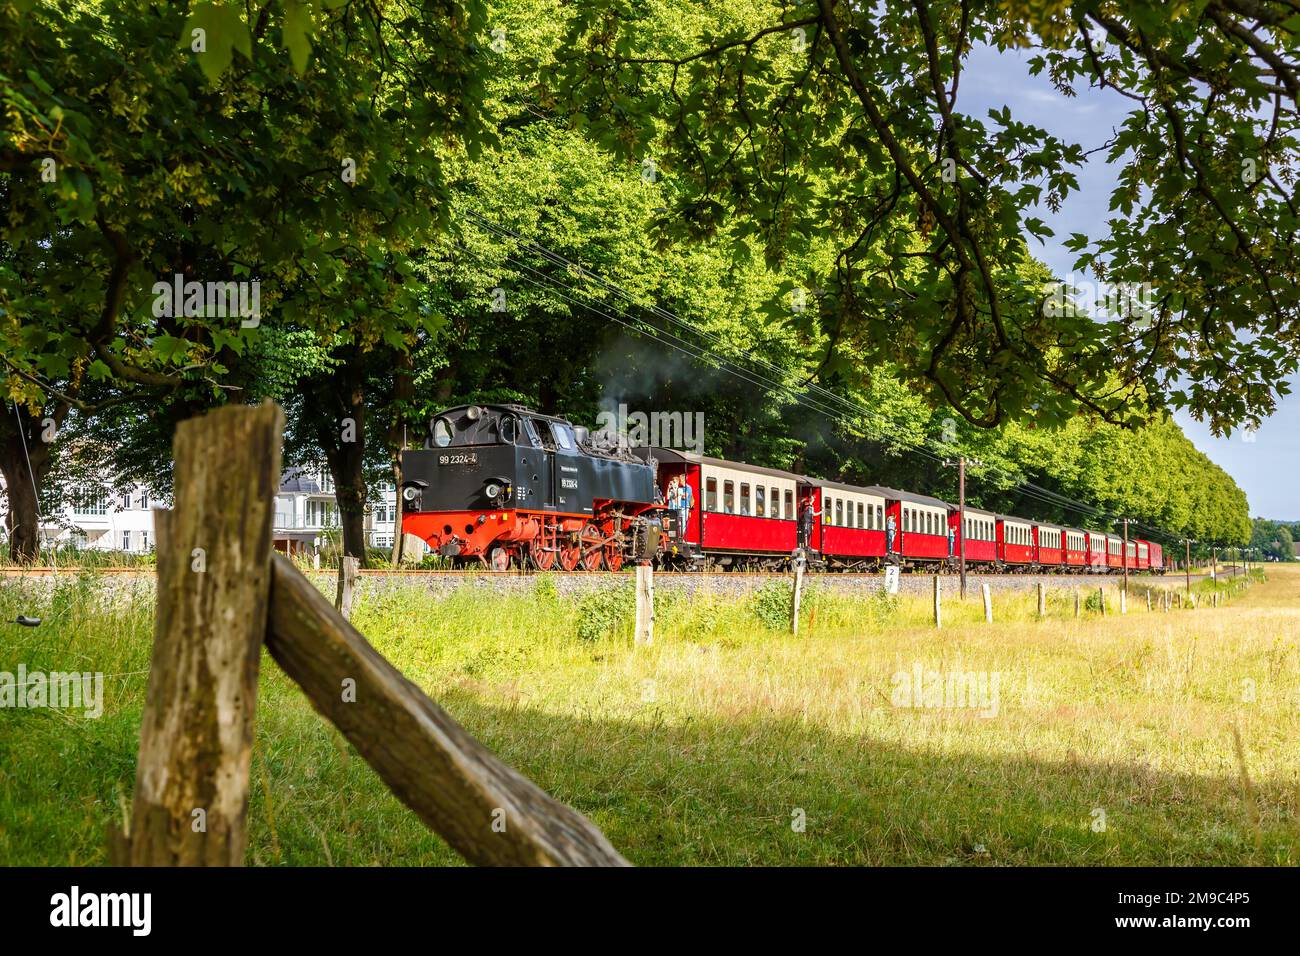 Baederbahn Molli Dampflokomotive Railrail in Bad Doberan, Deutschland Stockfoto